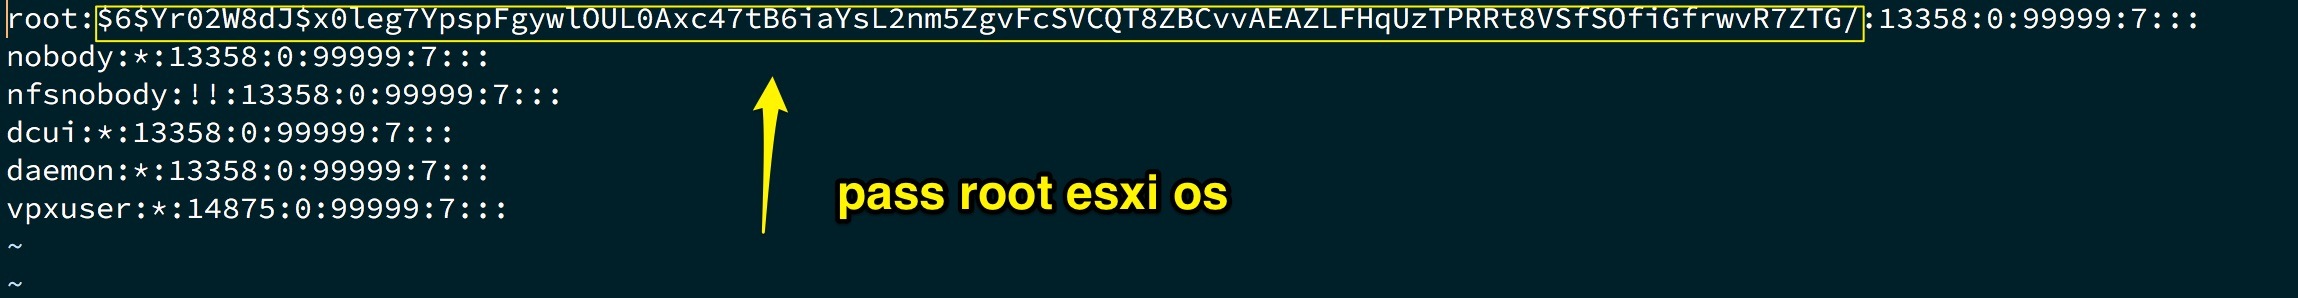 reset mật khẩu root trên esxi - 4